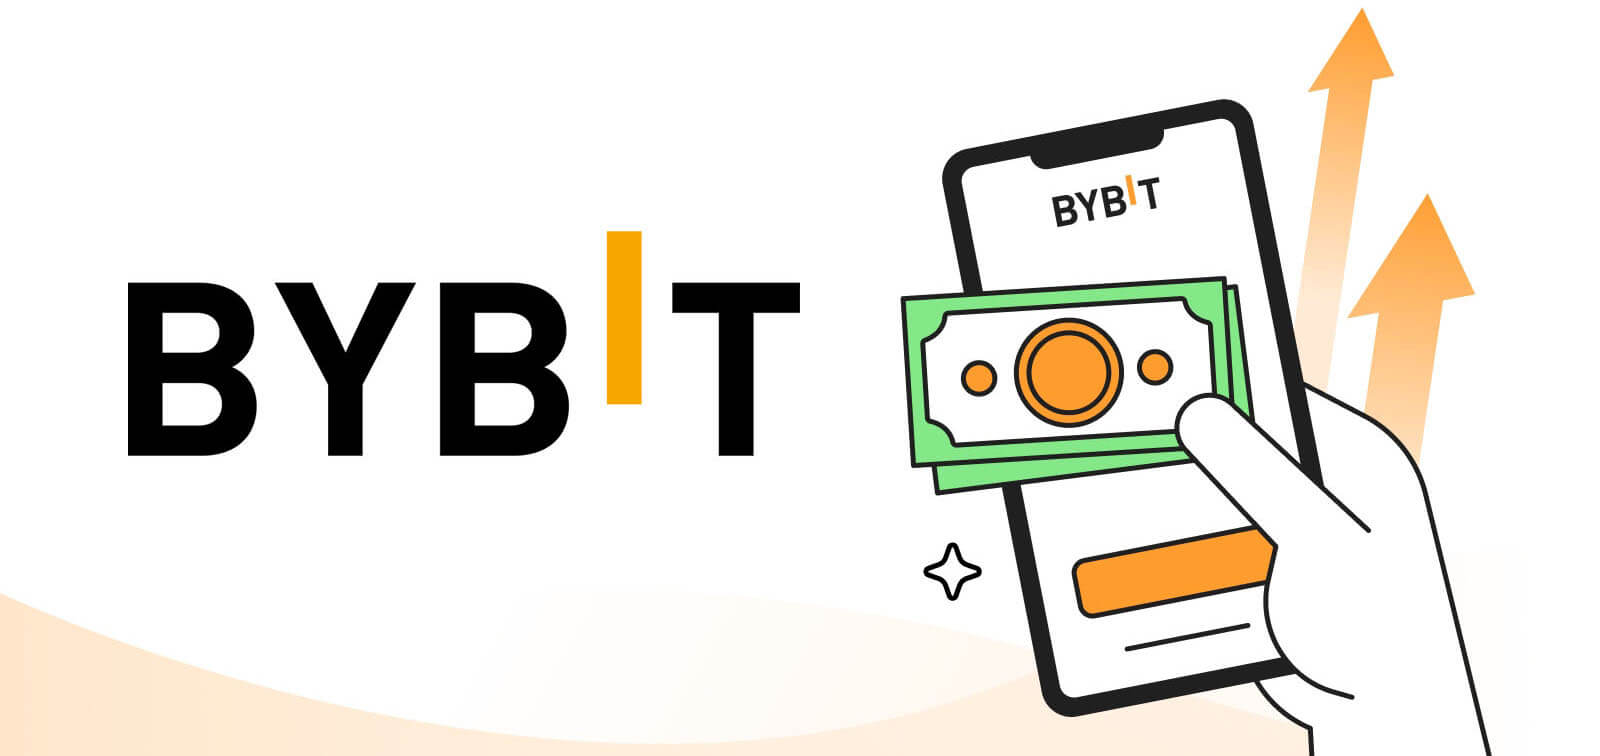 “Bybit” programmasyny göçürip almak: “Android” we “iOS Mobile” -da nädip gurmaly